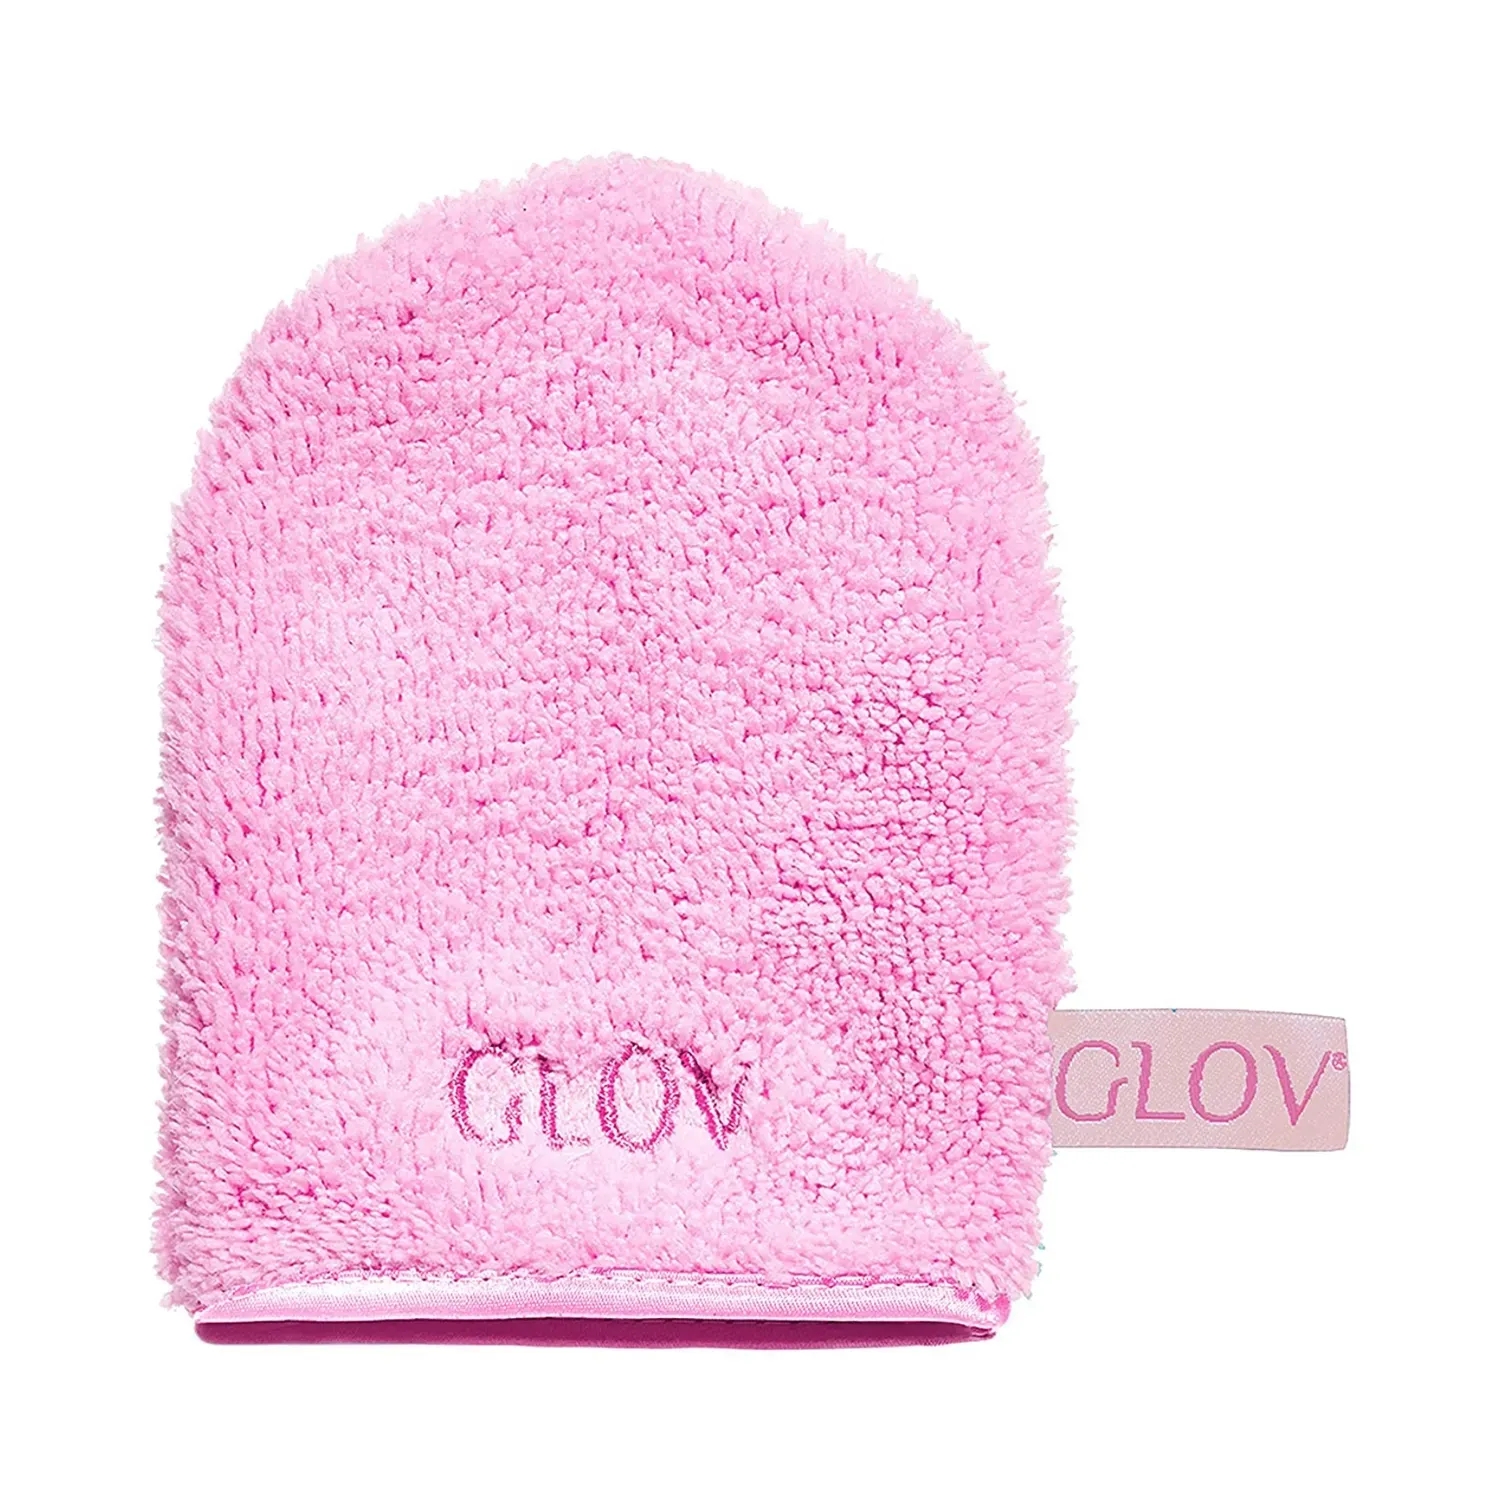 Glov | Glov On The Go Makeup Remover Glove - Cozy Rosie (25 g)